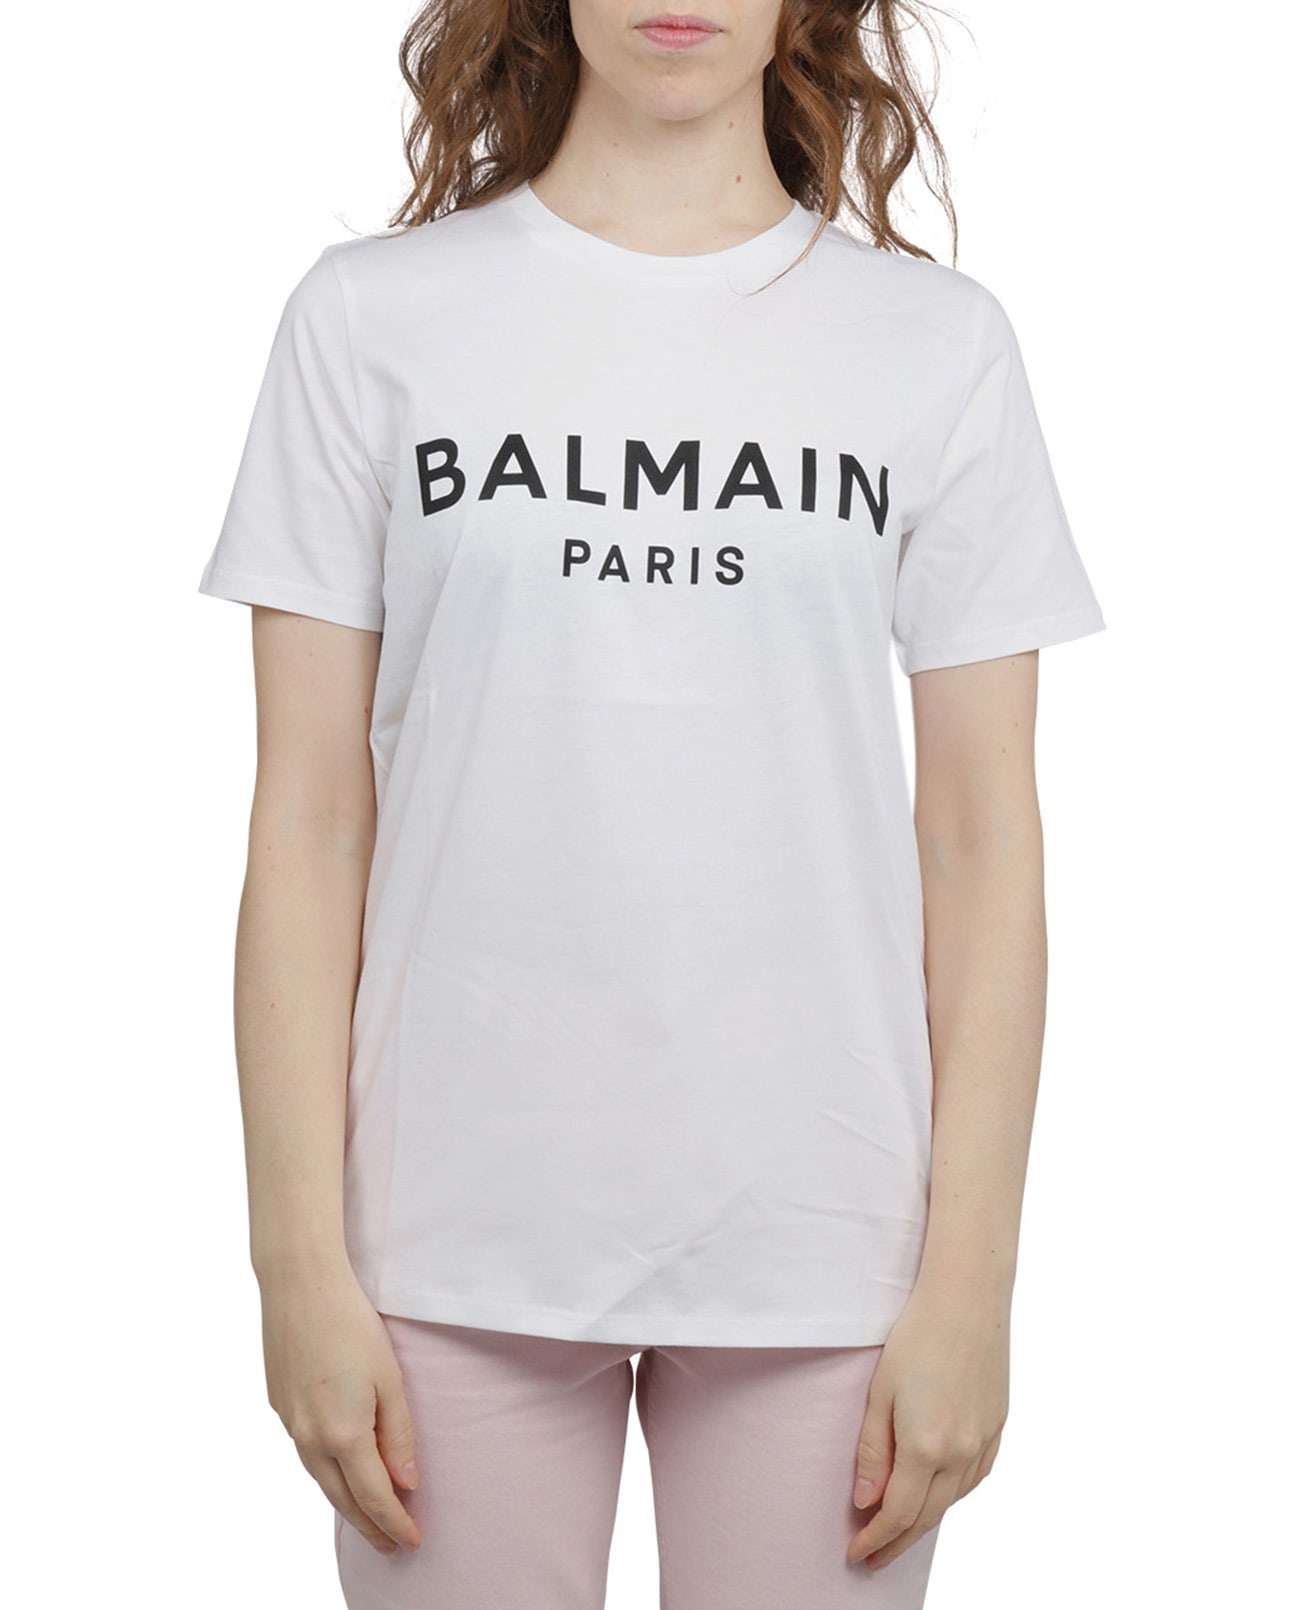 Balmain White T-shirt Black Logo